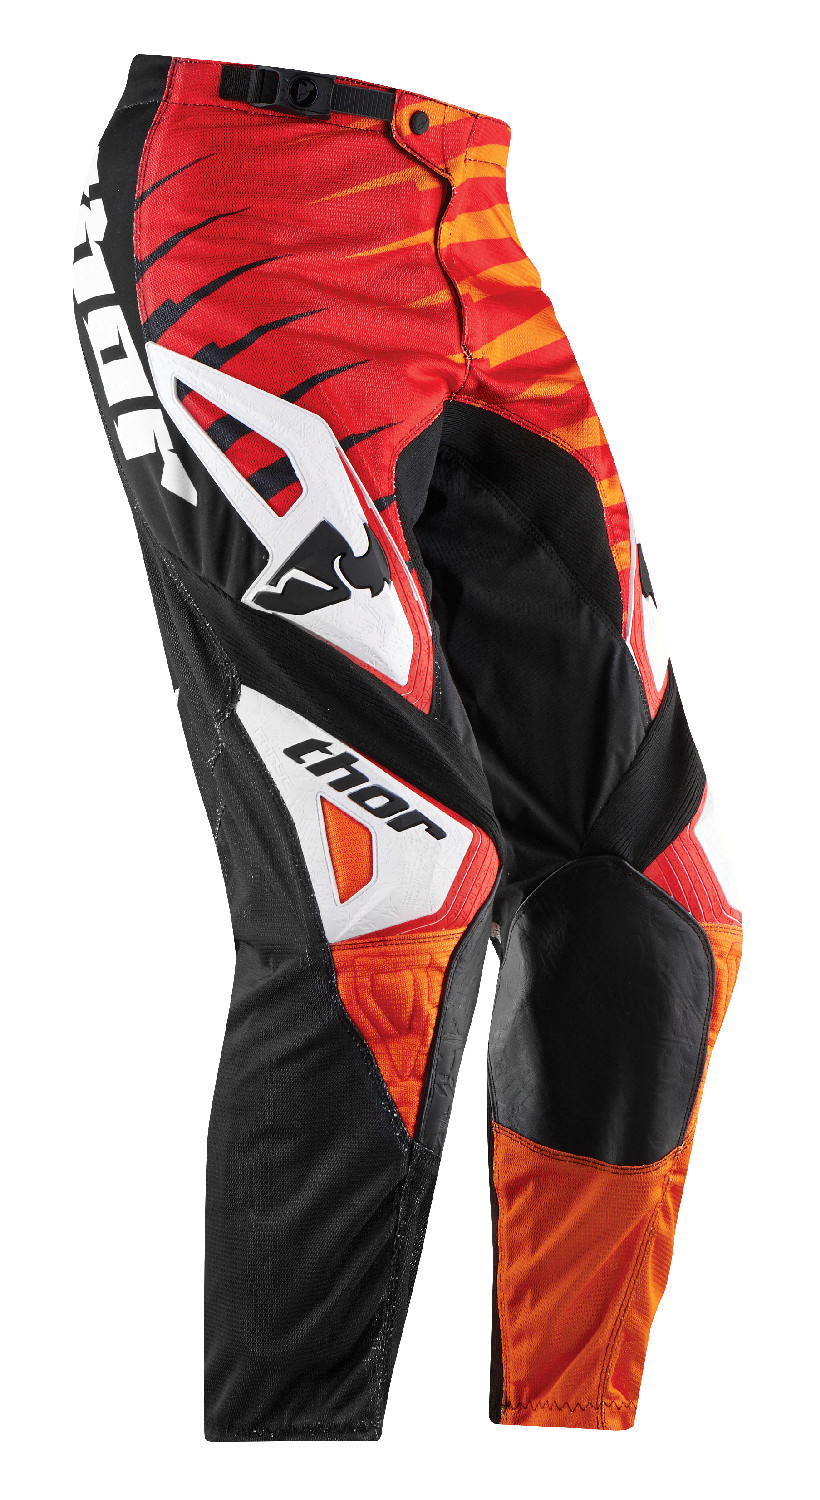 Tenue Motocross Complète THOR MX Core Bend Navy/Orange Fluo 2015.